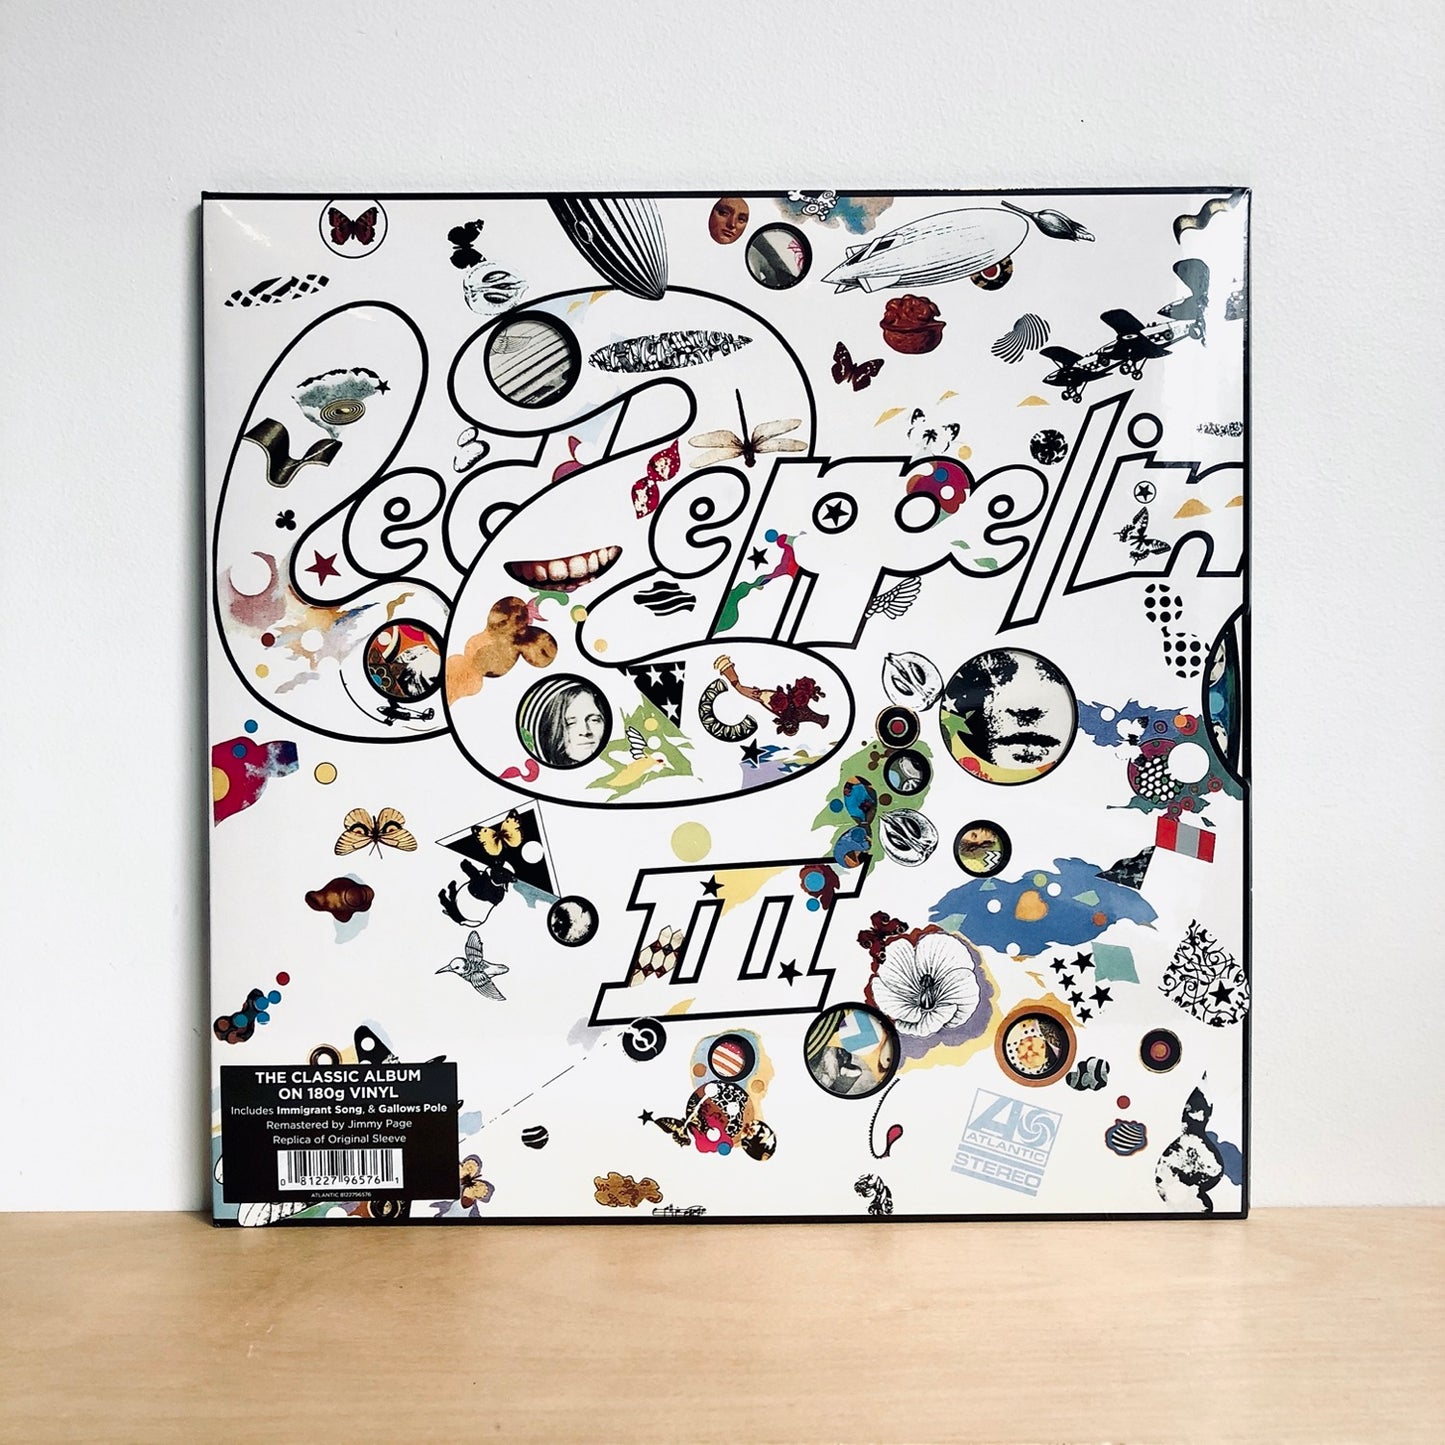 Led Zeppelin - III. LP